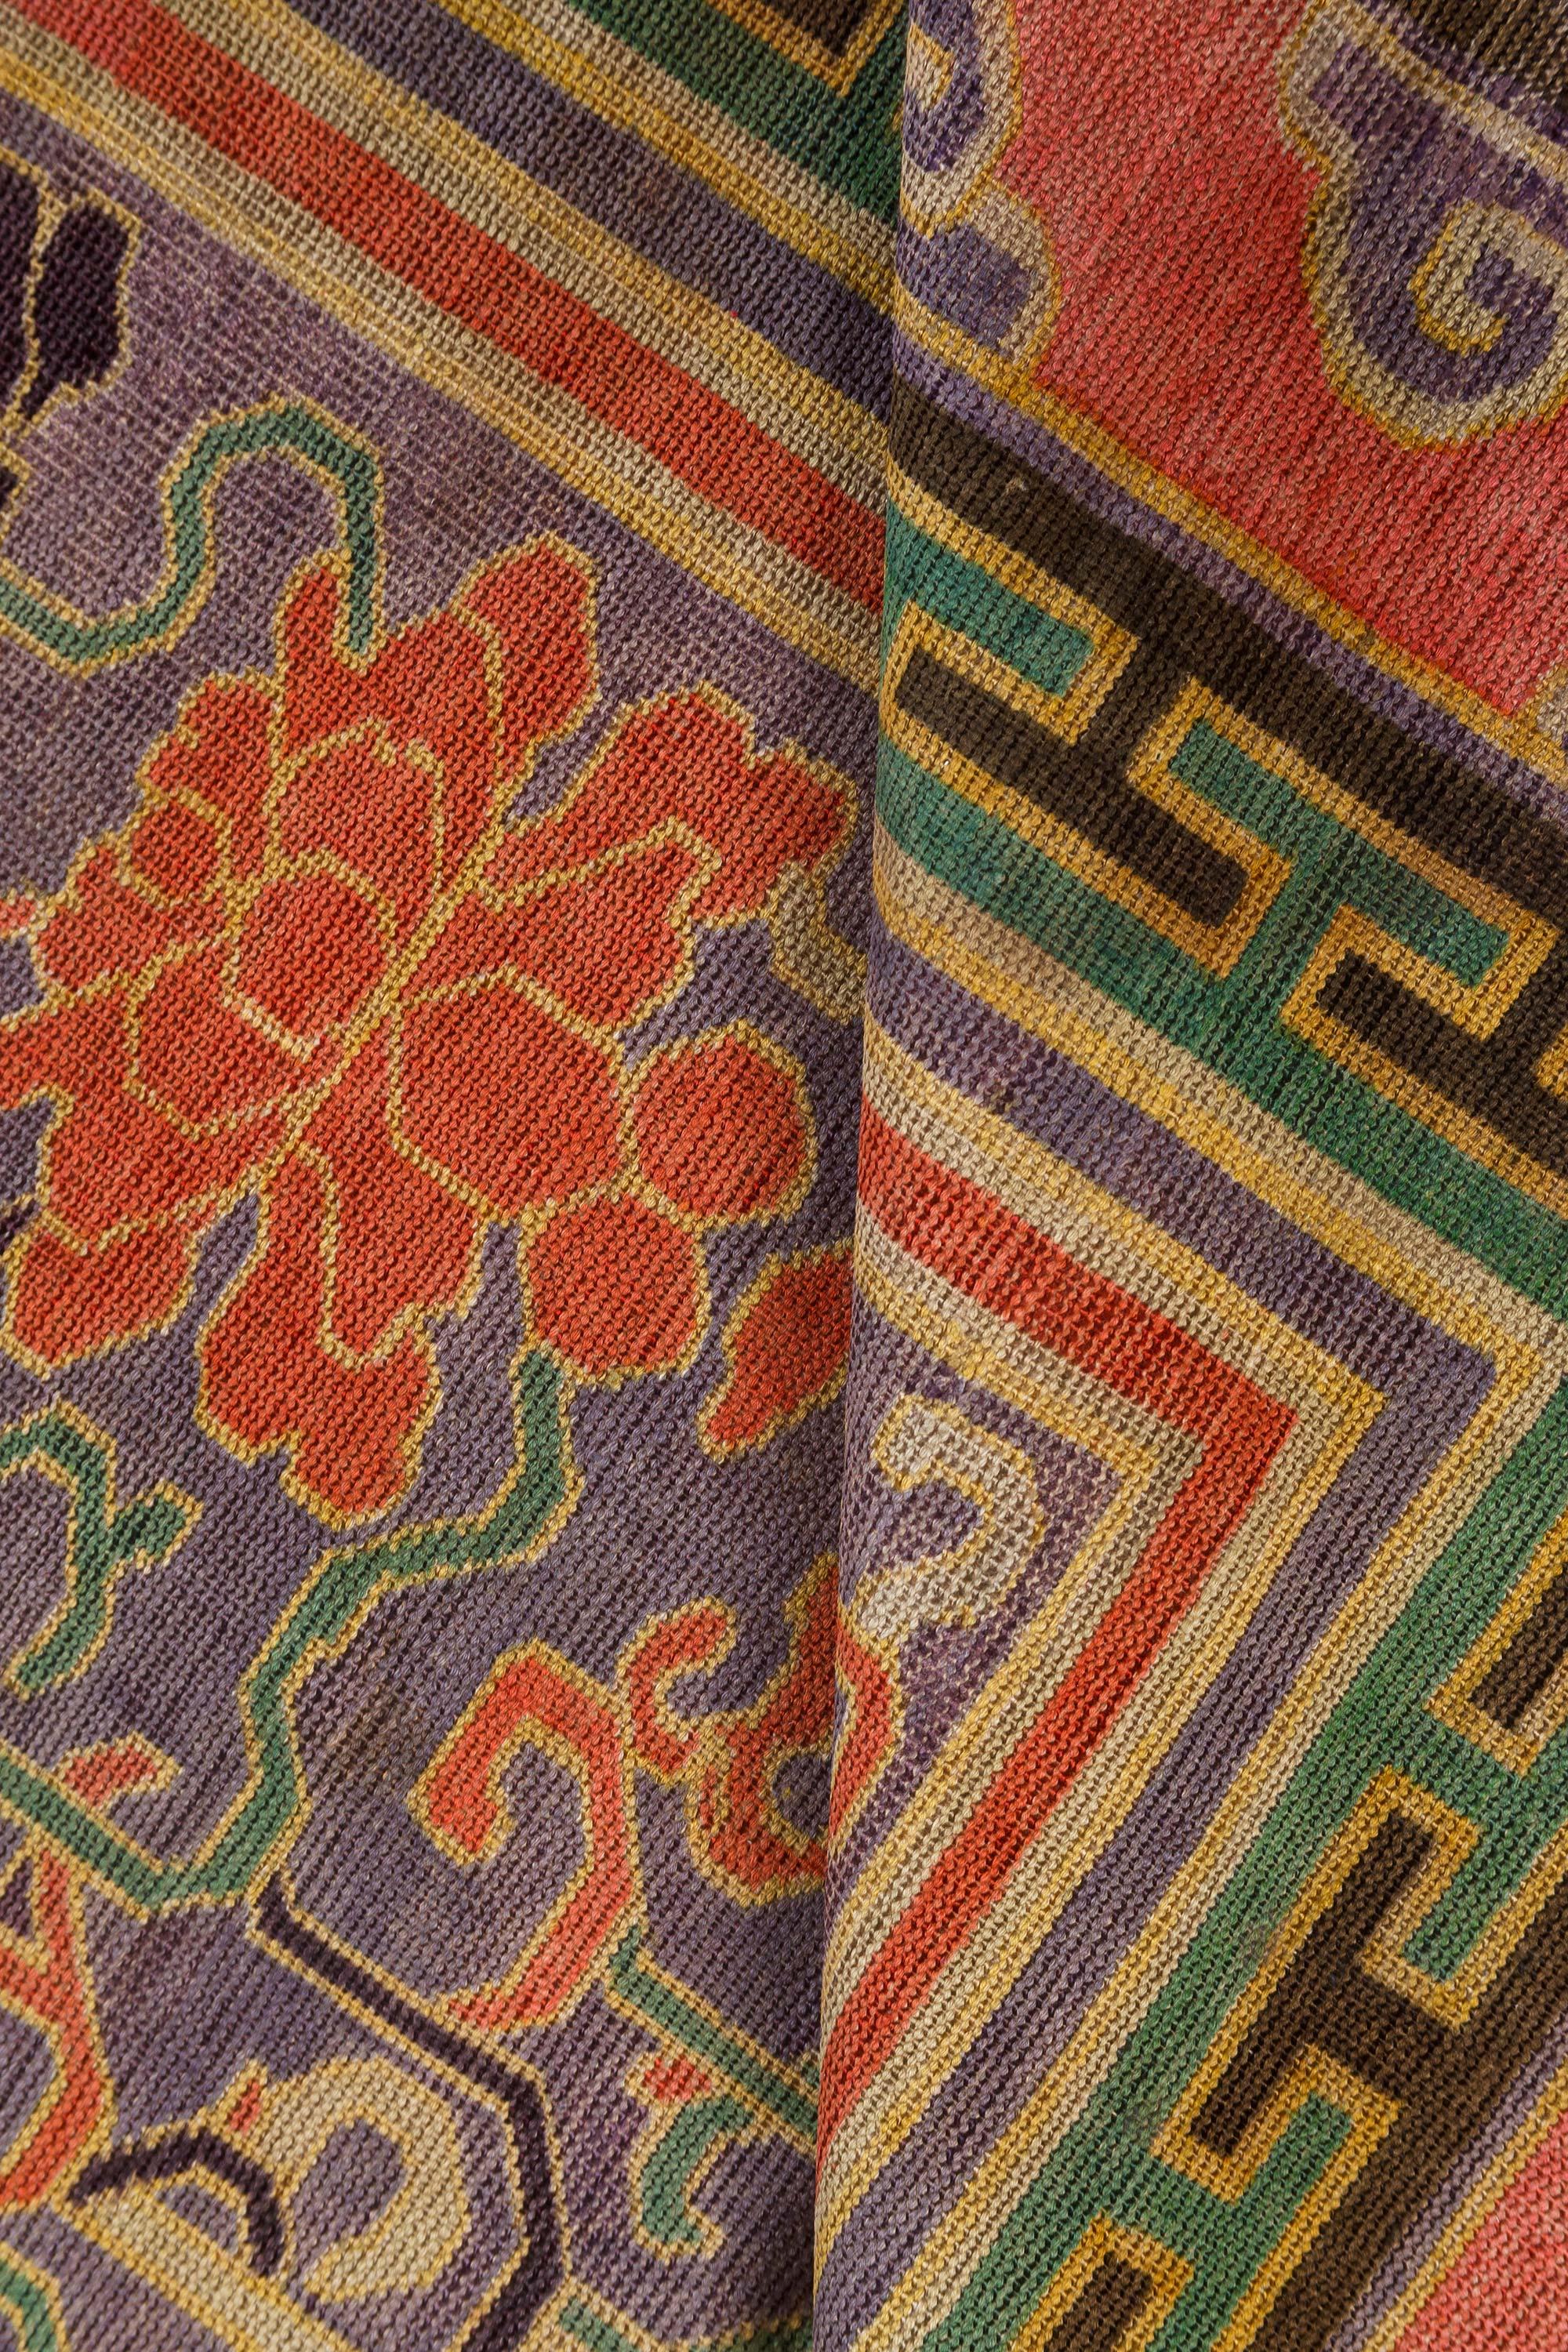 Vintage Chinese bold, botanic silk carpet in purple, red, beige, green
Size: 5'0